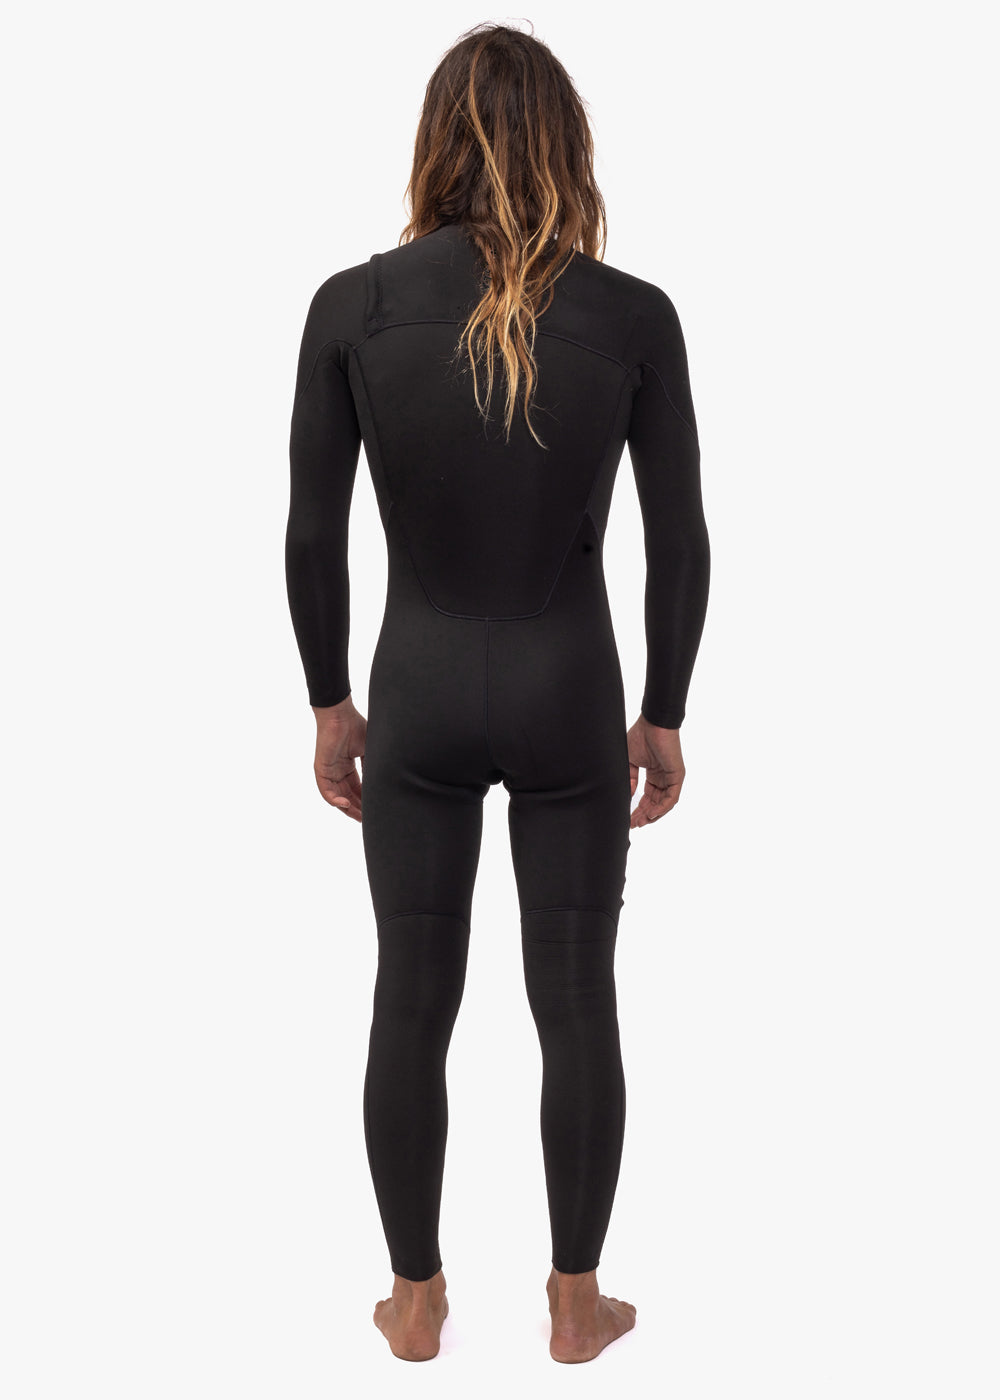 7 Seas 4-3 Full Chest Zip Wetsuit- Tonal Logos